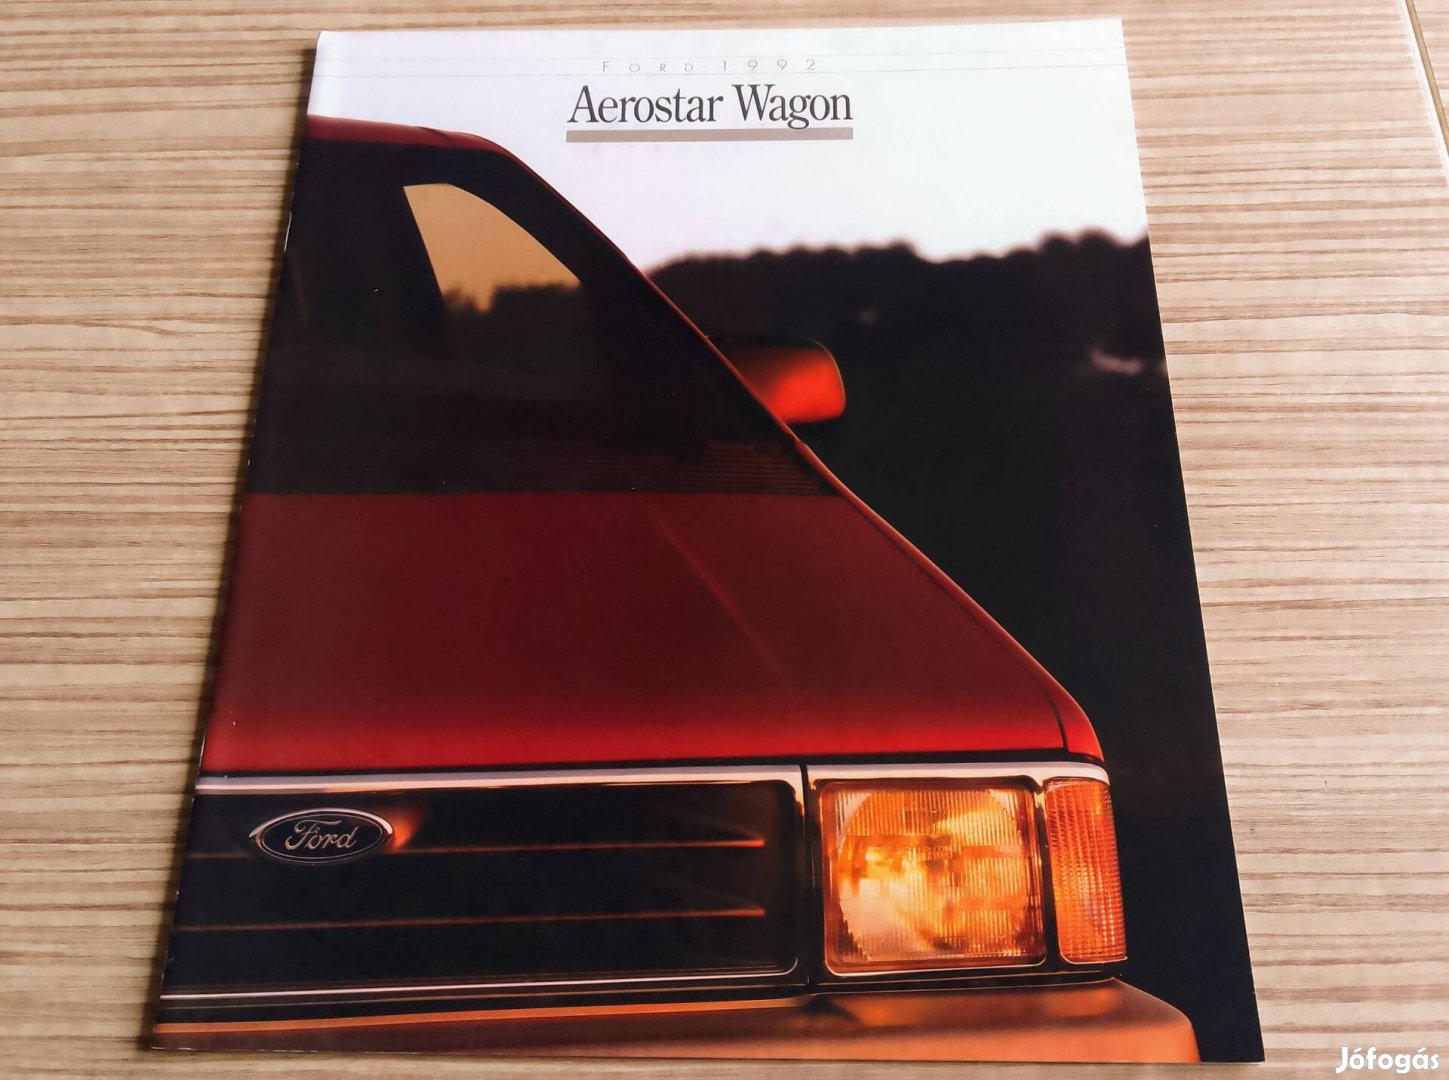 Amerikai Aerostar Wagon (1991) prospektus, katalógus.